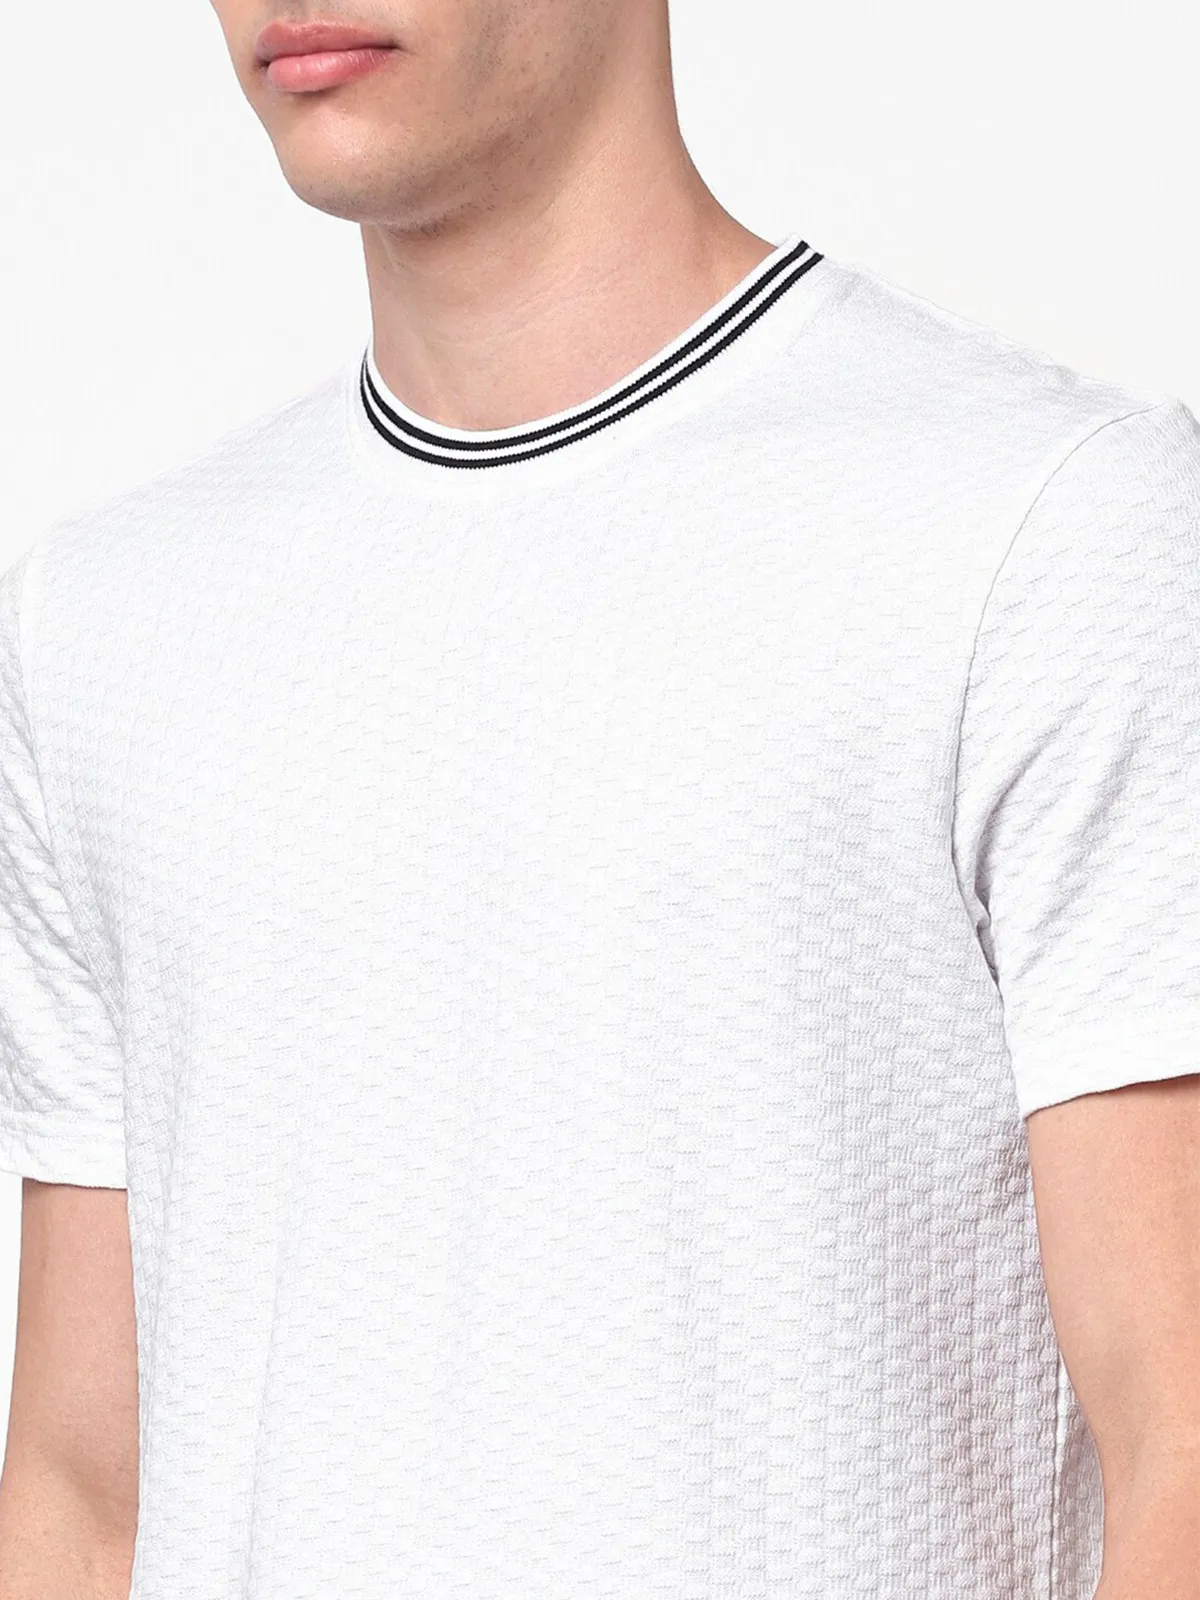 Celio knitted white t shirt in plain